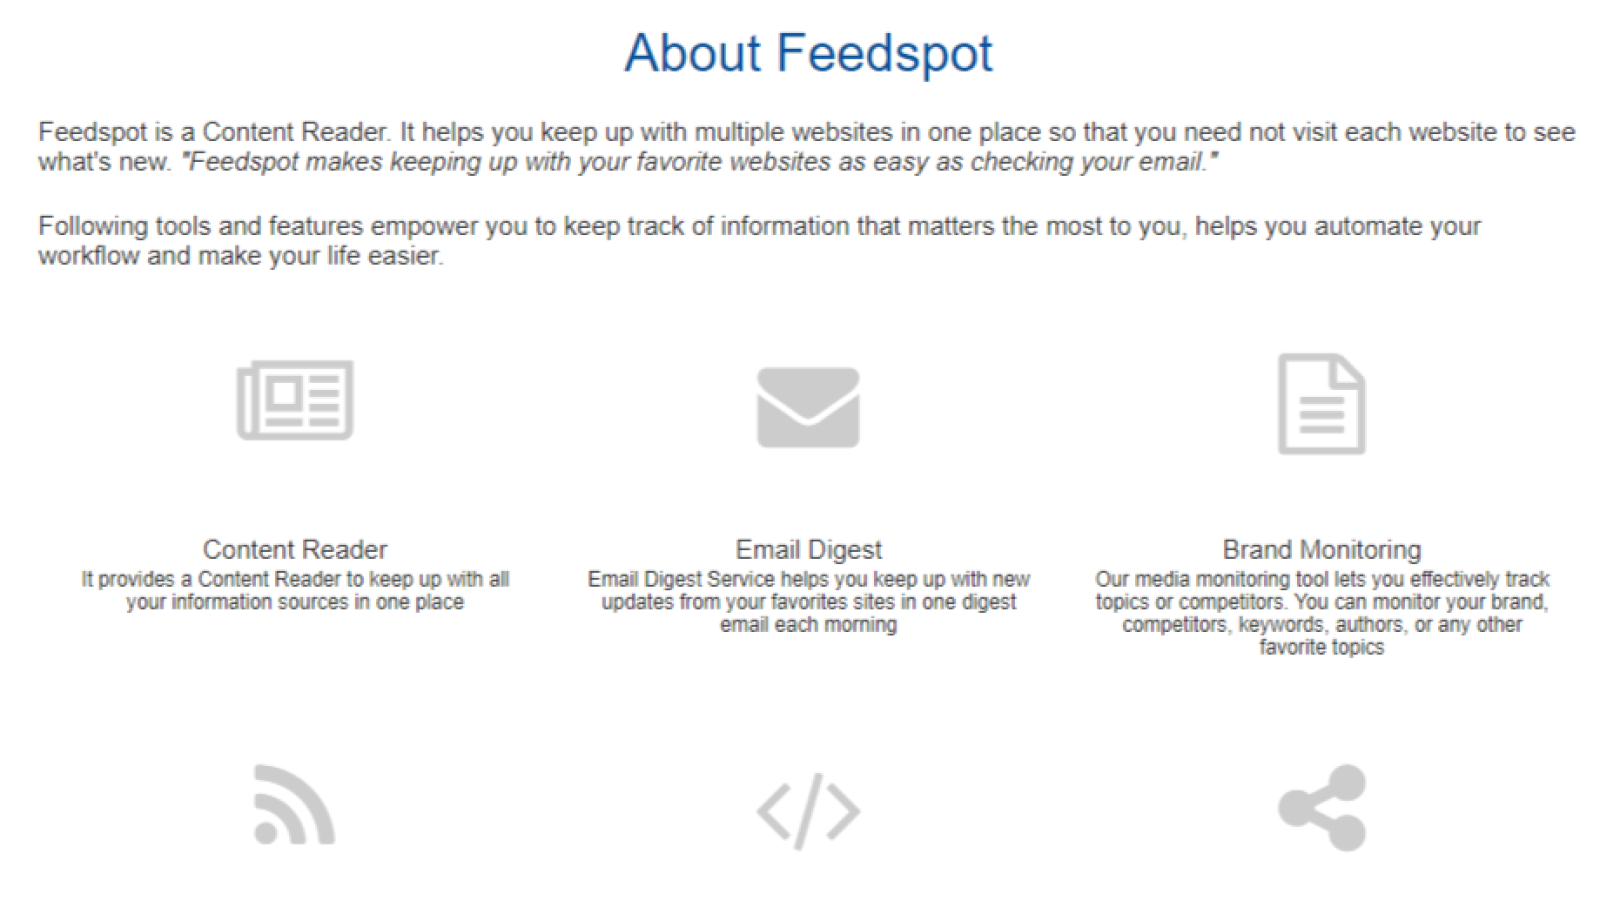 Feedspot builds one-stop dashboard